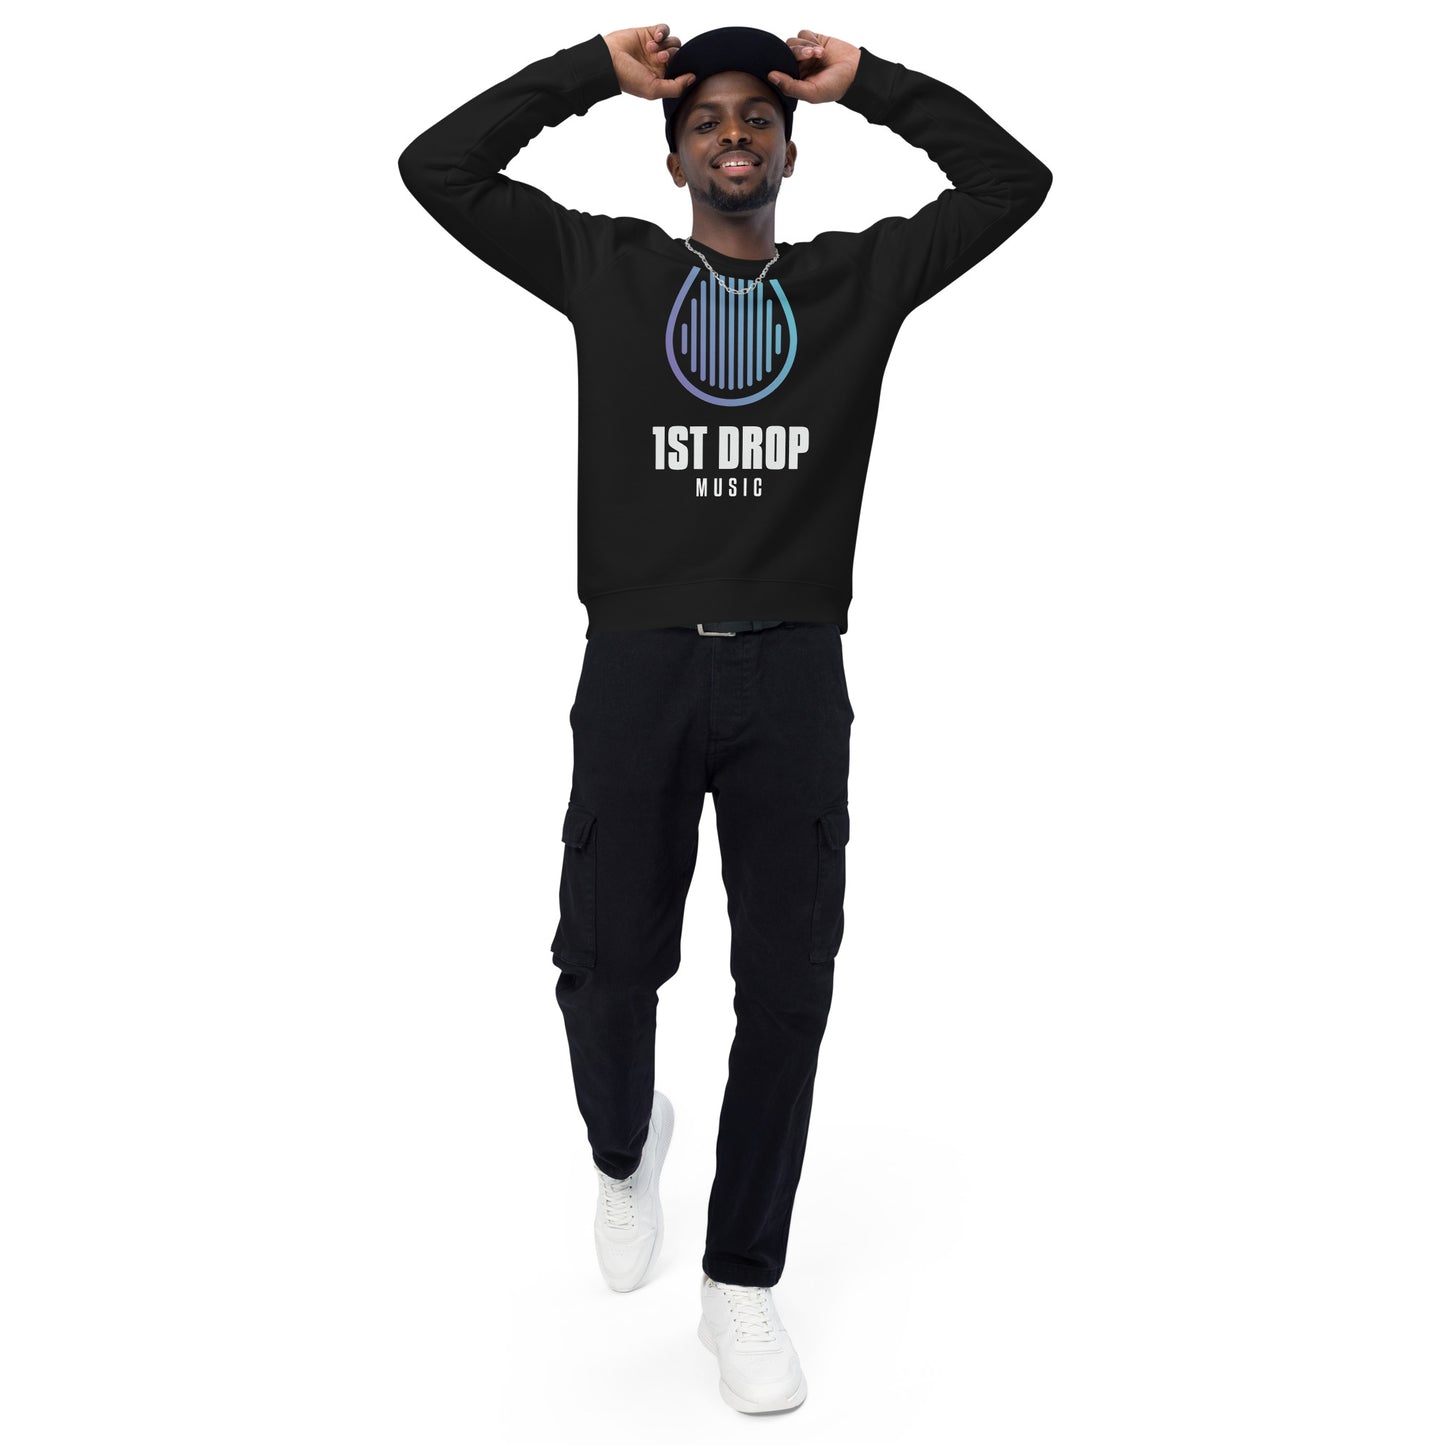 1st Drop Music - Unisex organic raglan sweatshirt